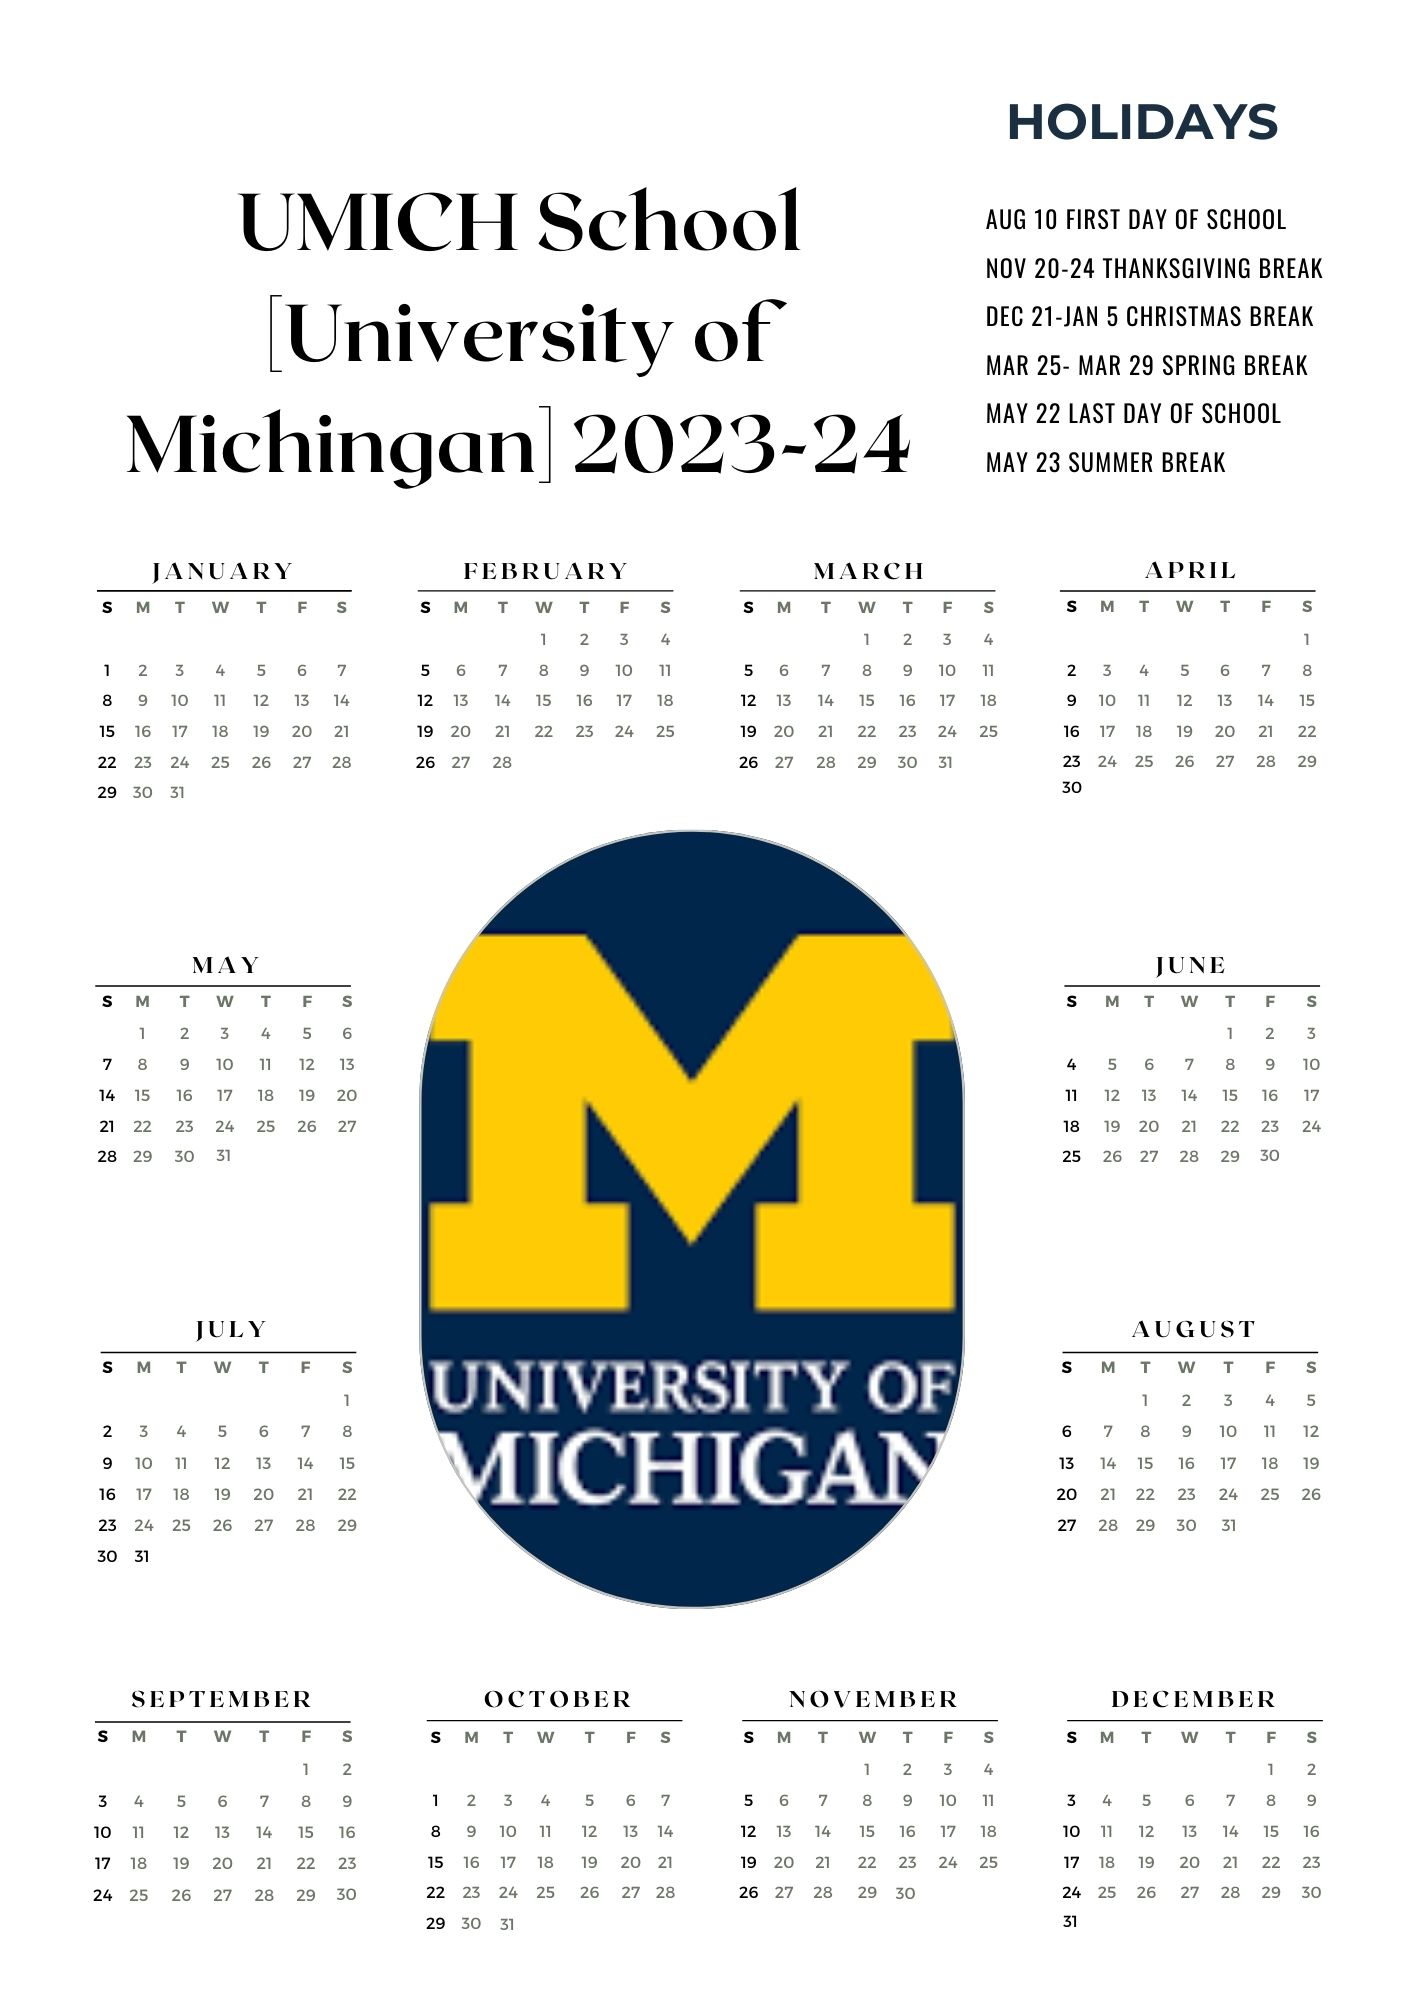 UMICH School Calendar Holidays 2023 24 University Of Michigan